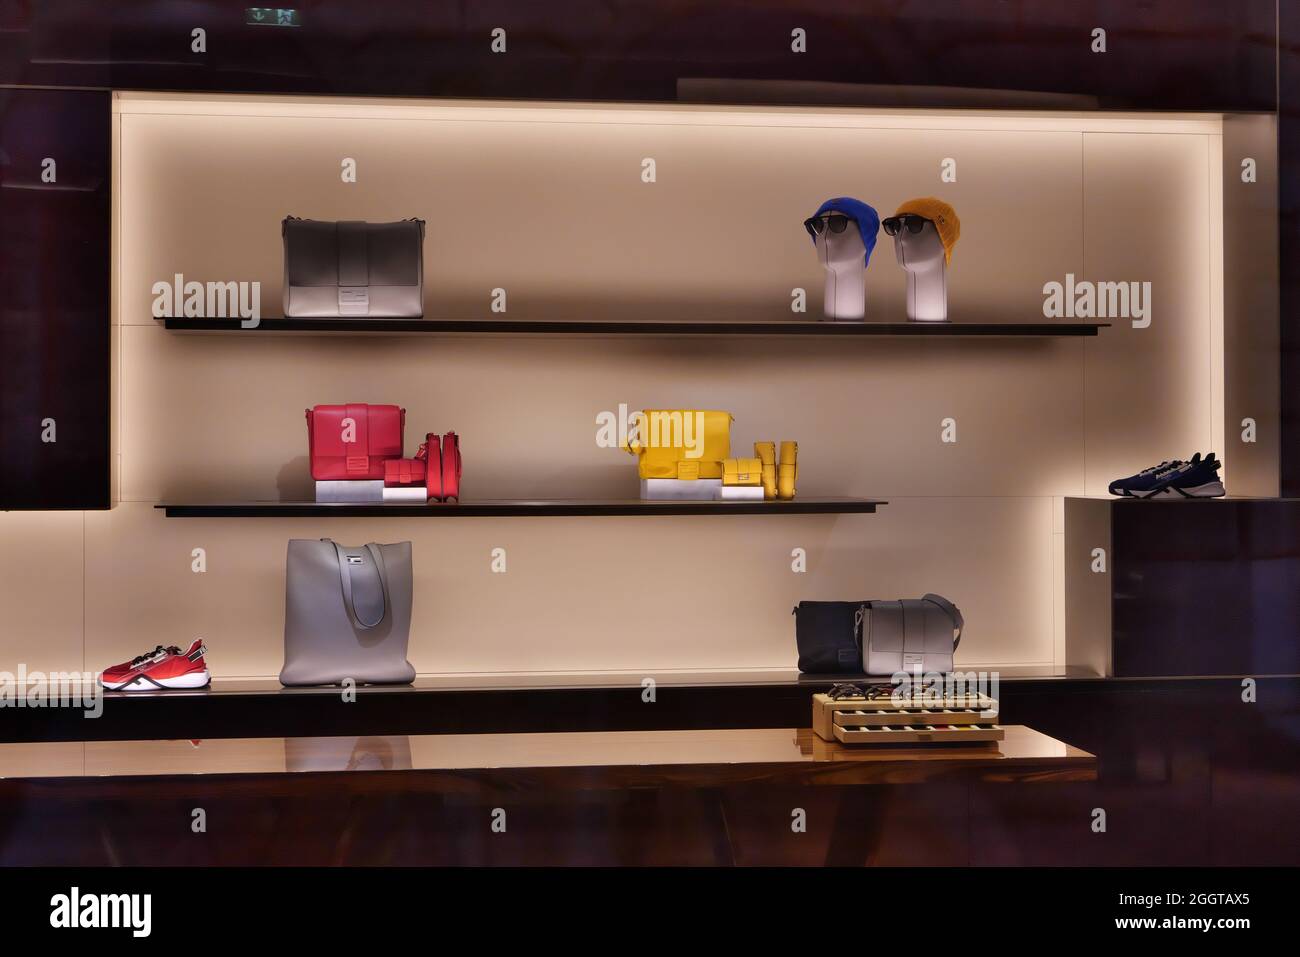 Fendi bags at the Rinascente fashion store in Rome Stock Photo - Alamy